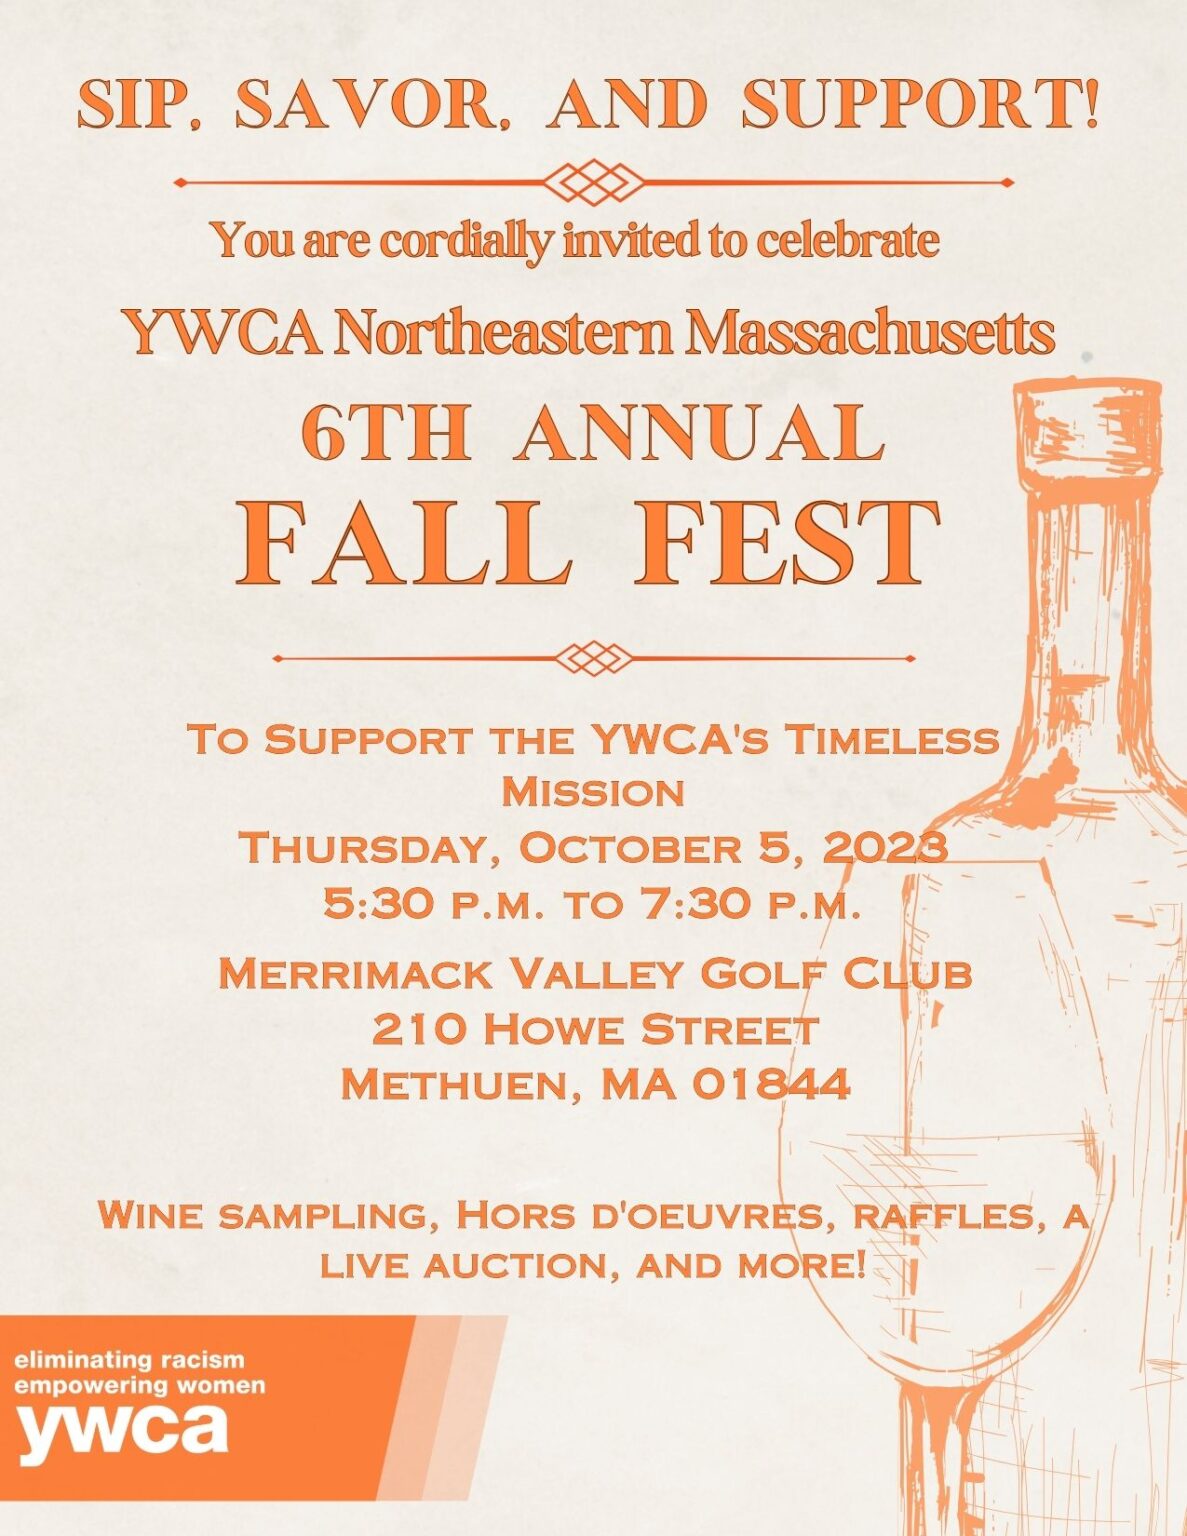 Fall Fest YWCA Northeastern Massachusetts Eliminating Racism